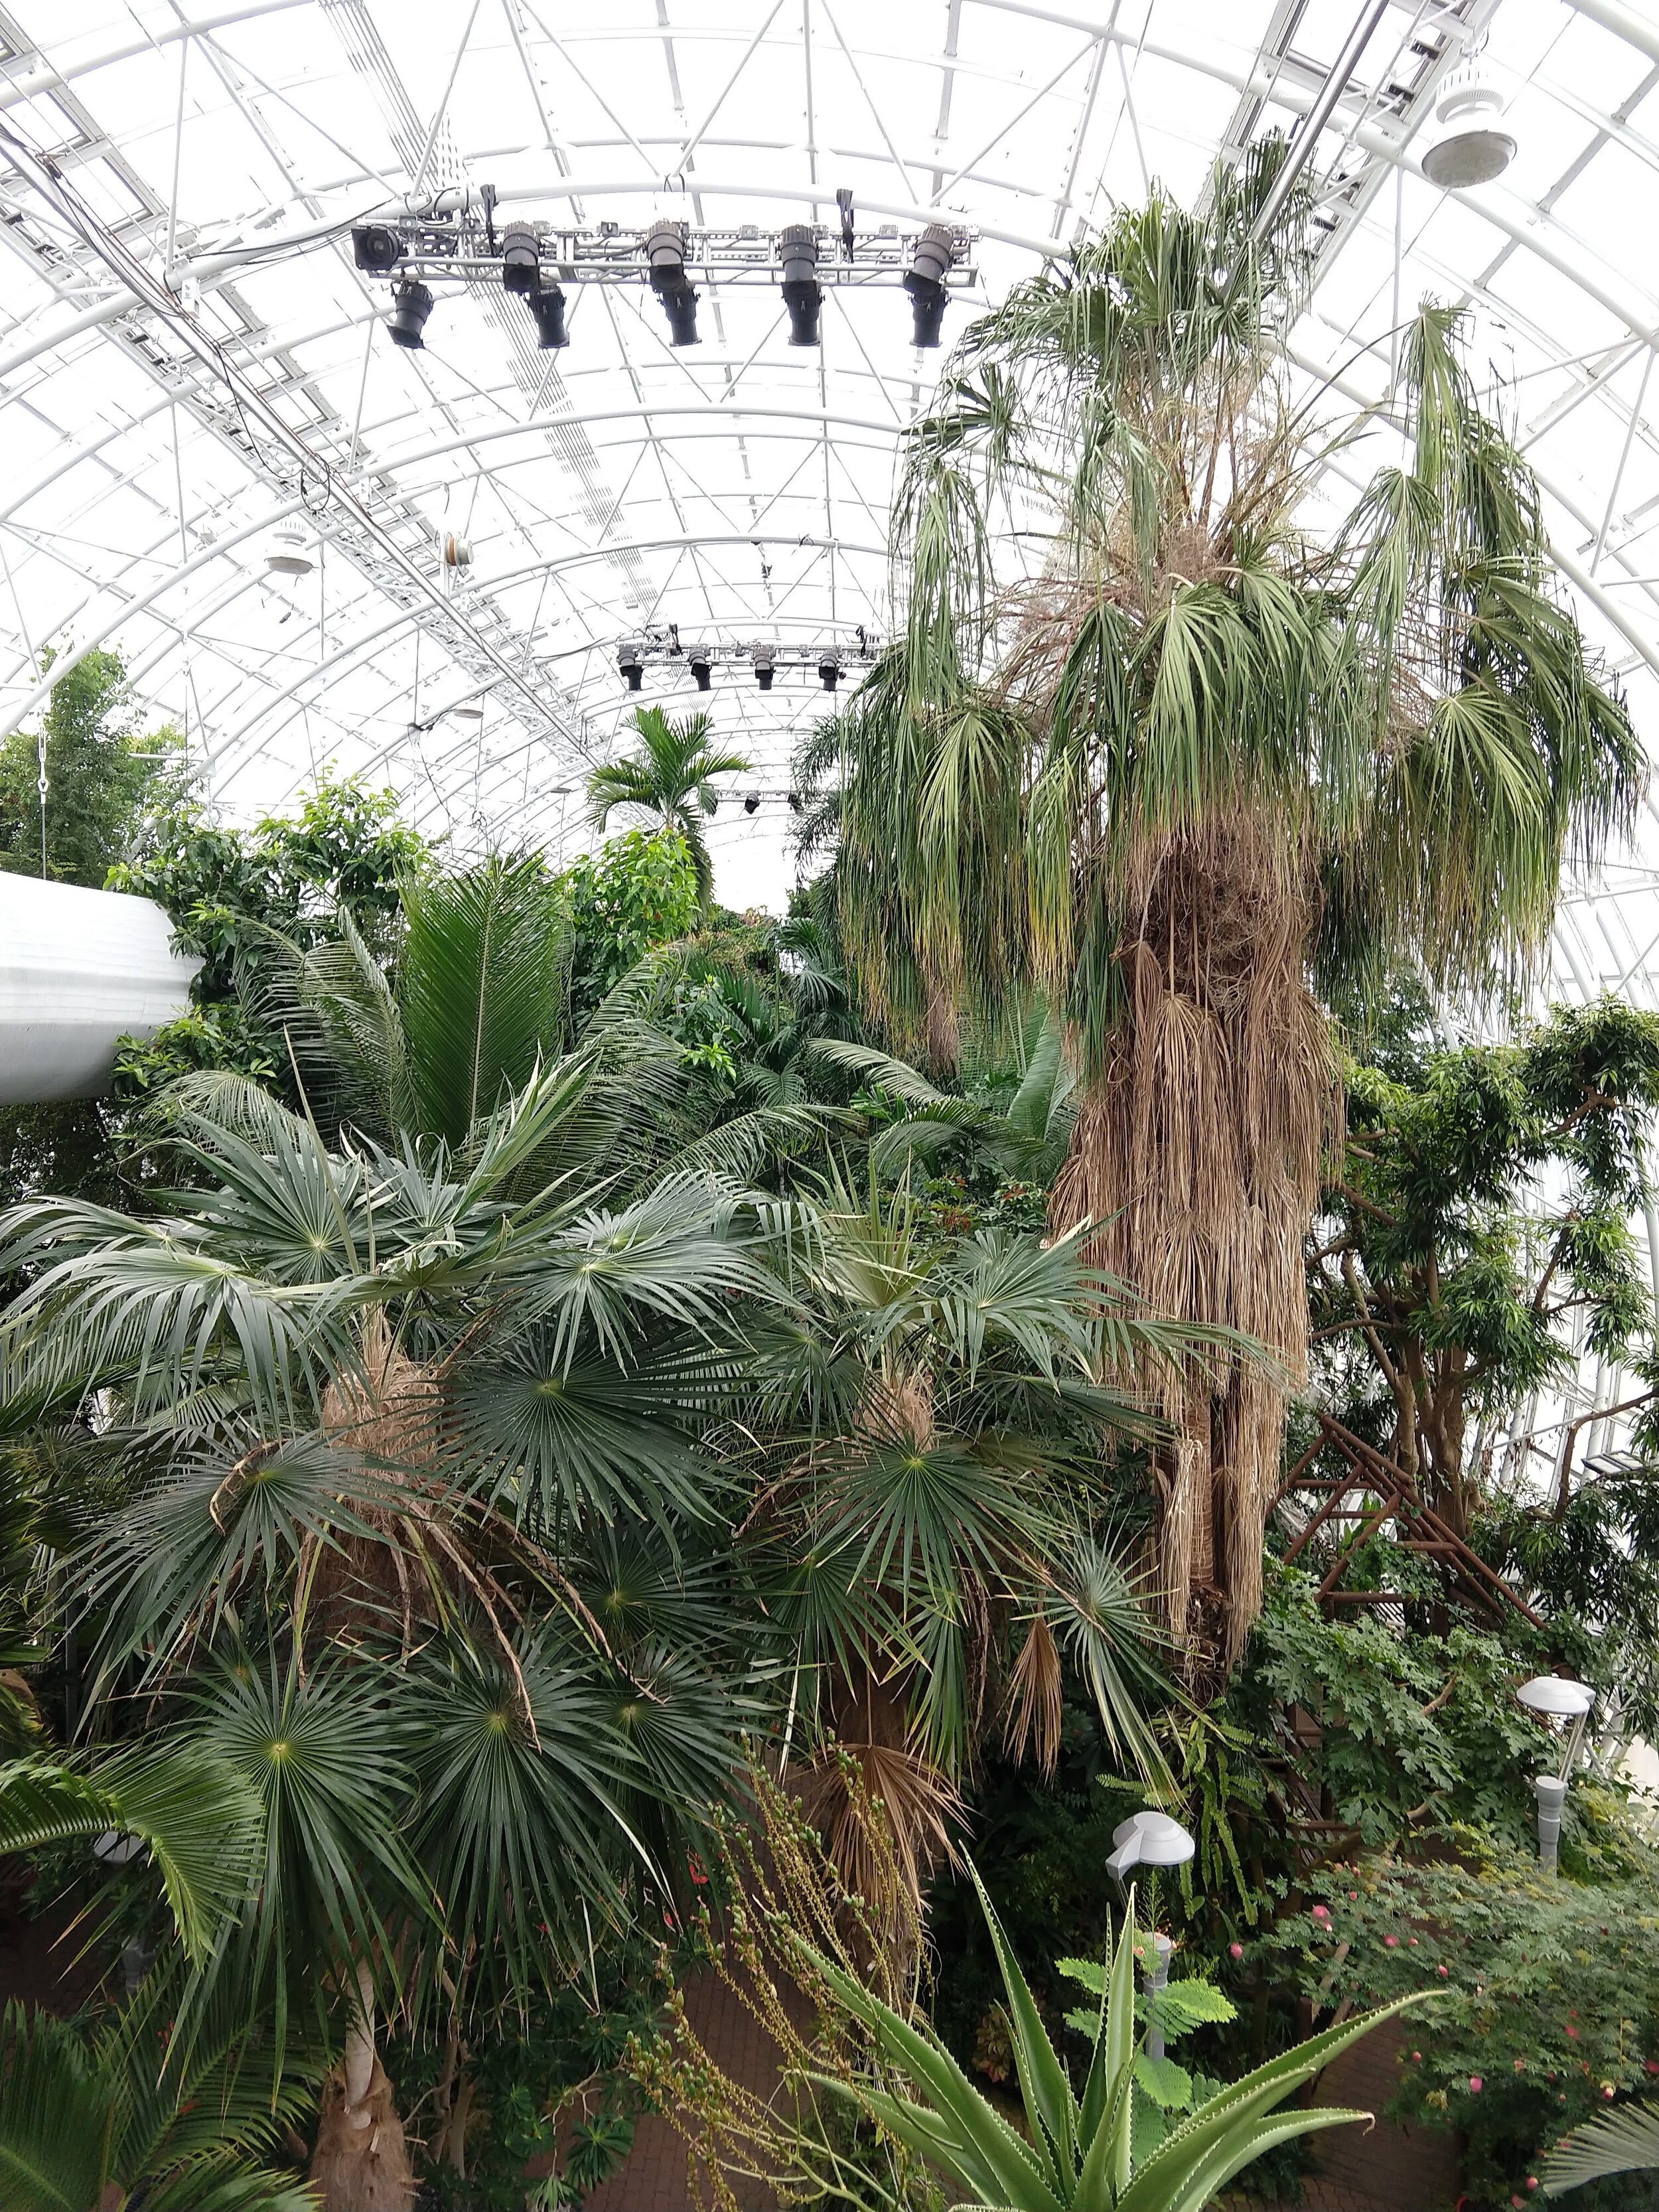 Myriad Botanical Gardens Palm Trees.jpg